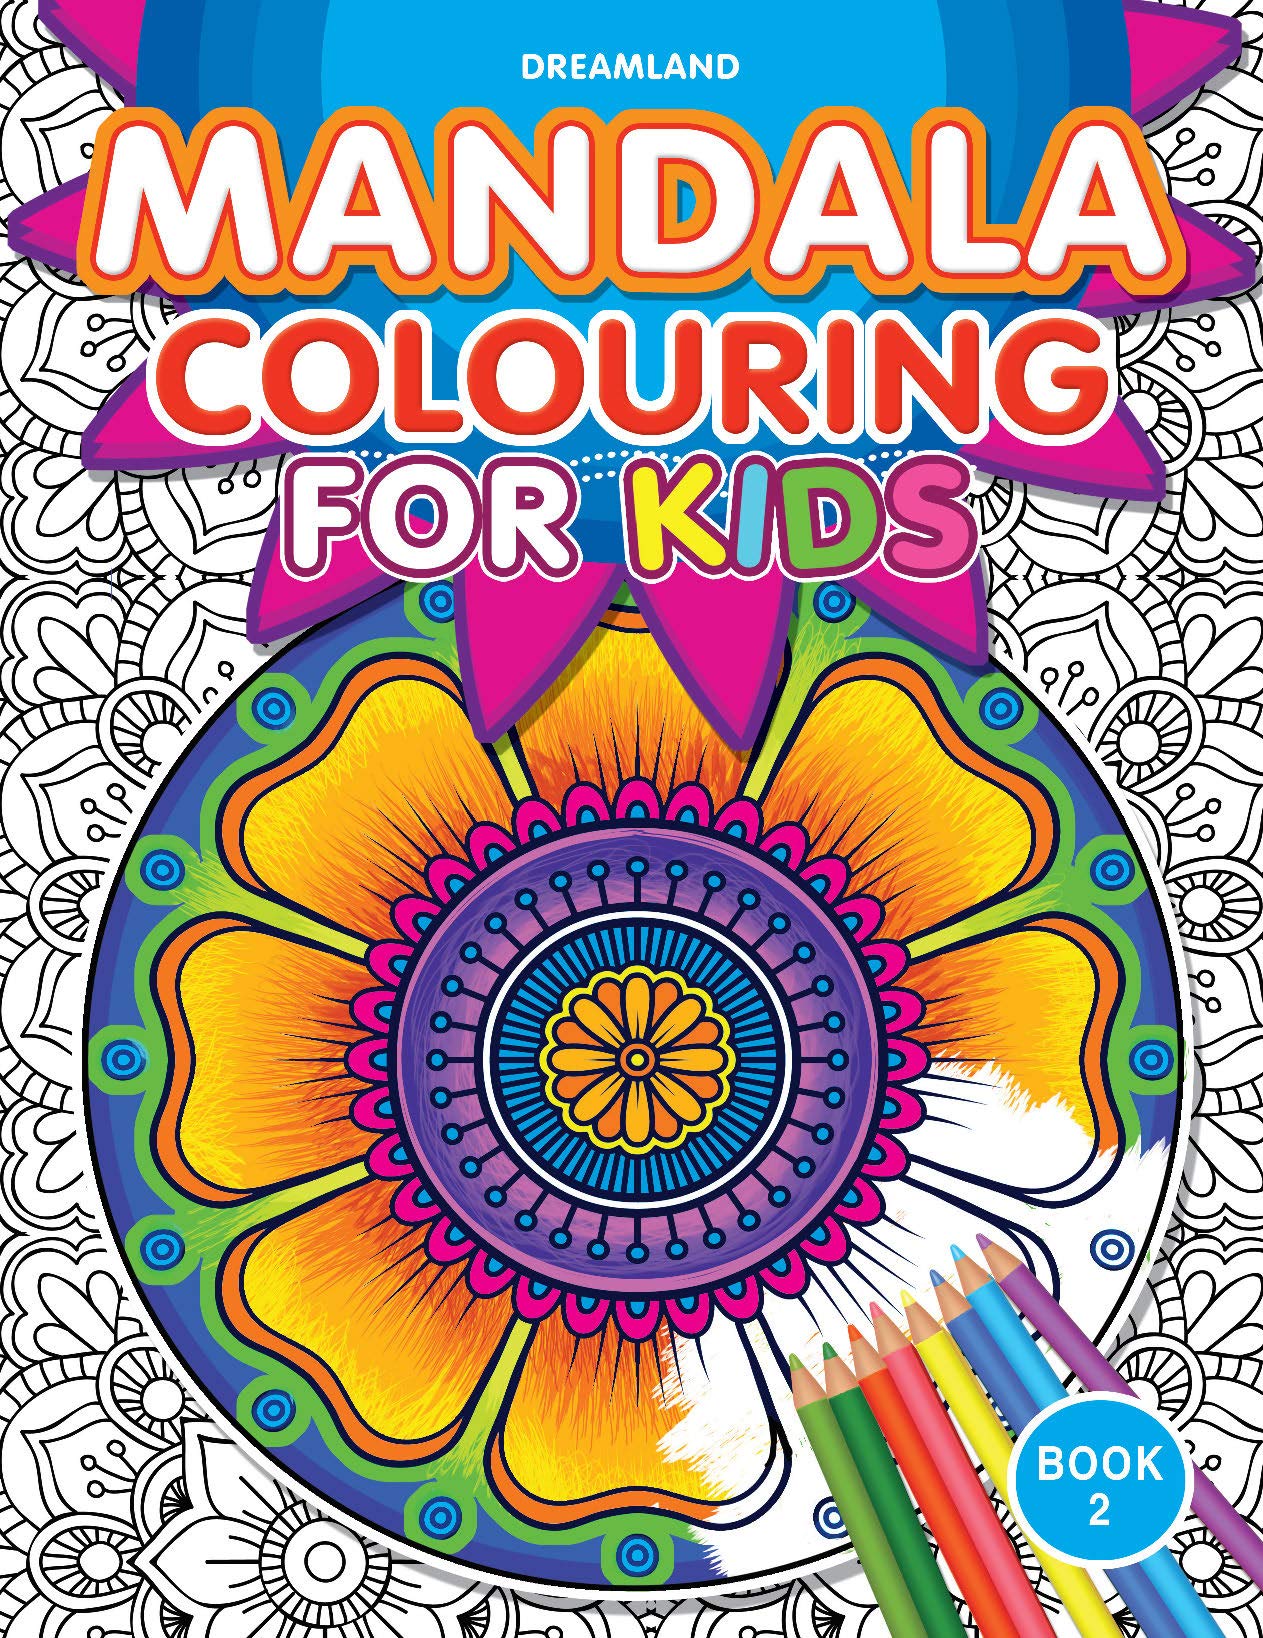 Mandala Colouring for Kids - Book 2